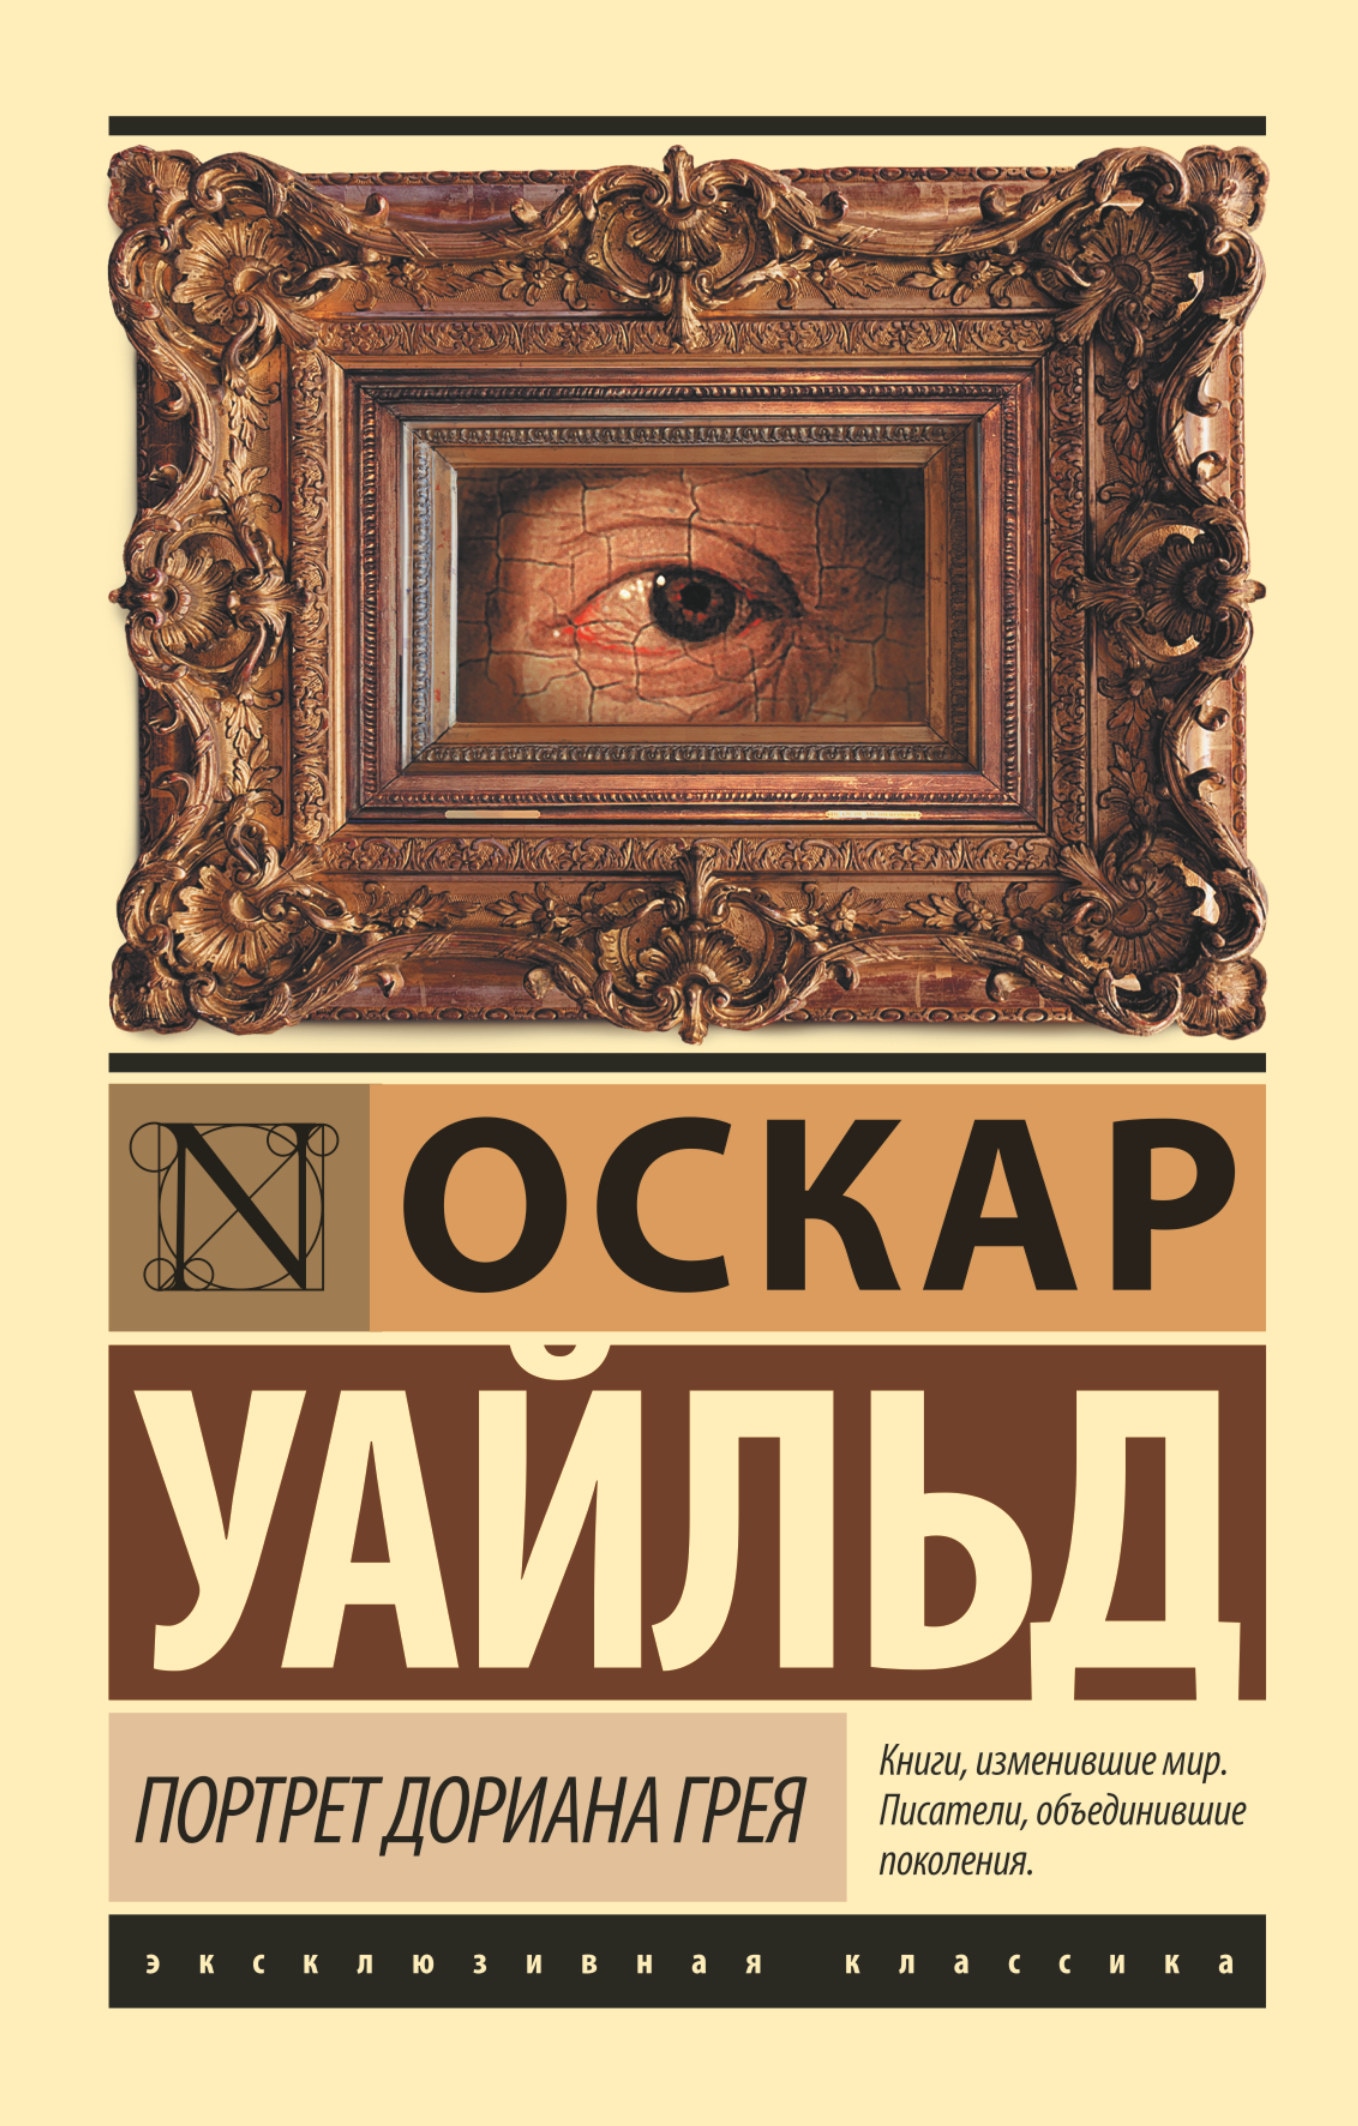 Book “Портрет Дориана Грея” by Оскар Уайльд — August 20, 2021